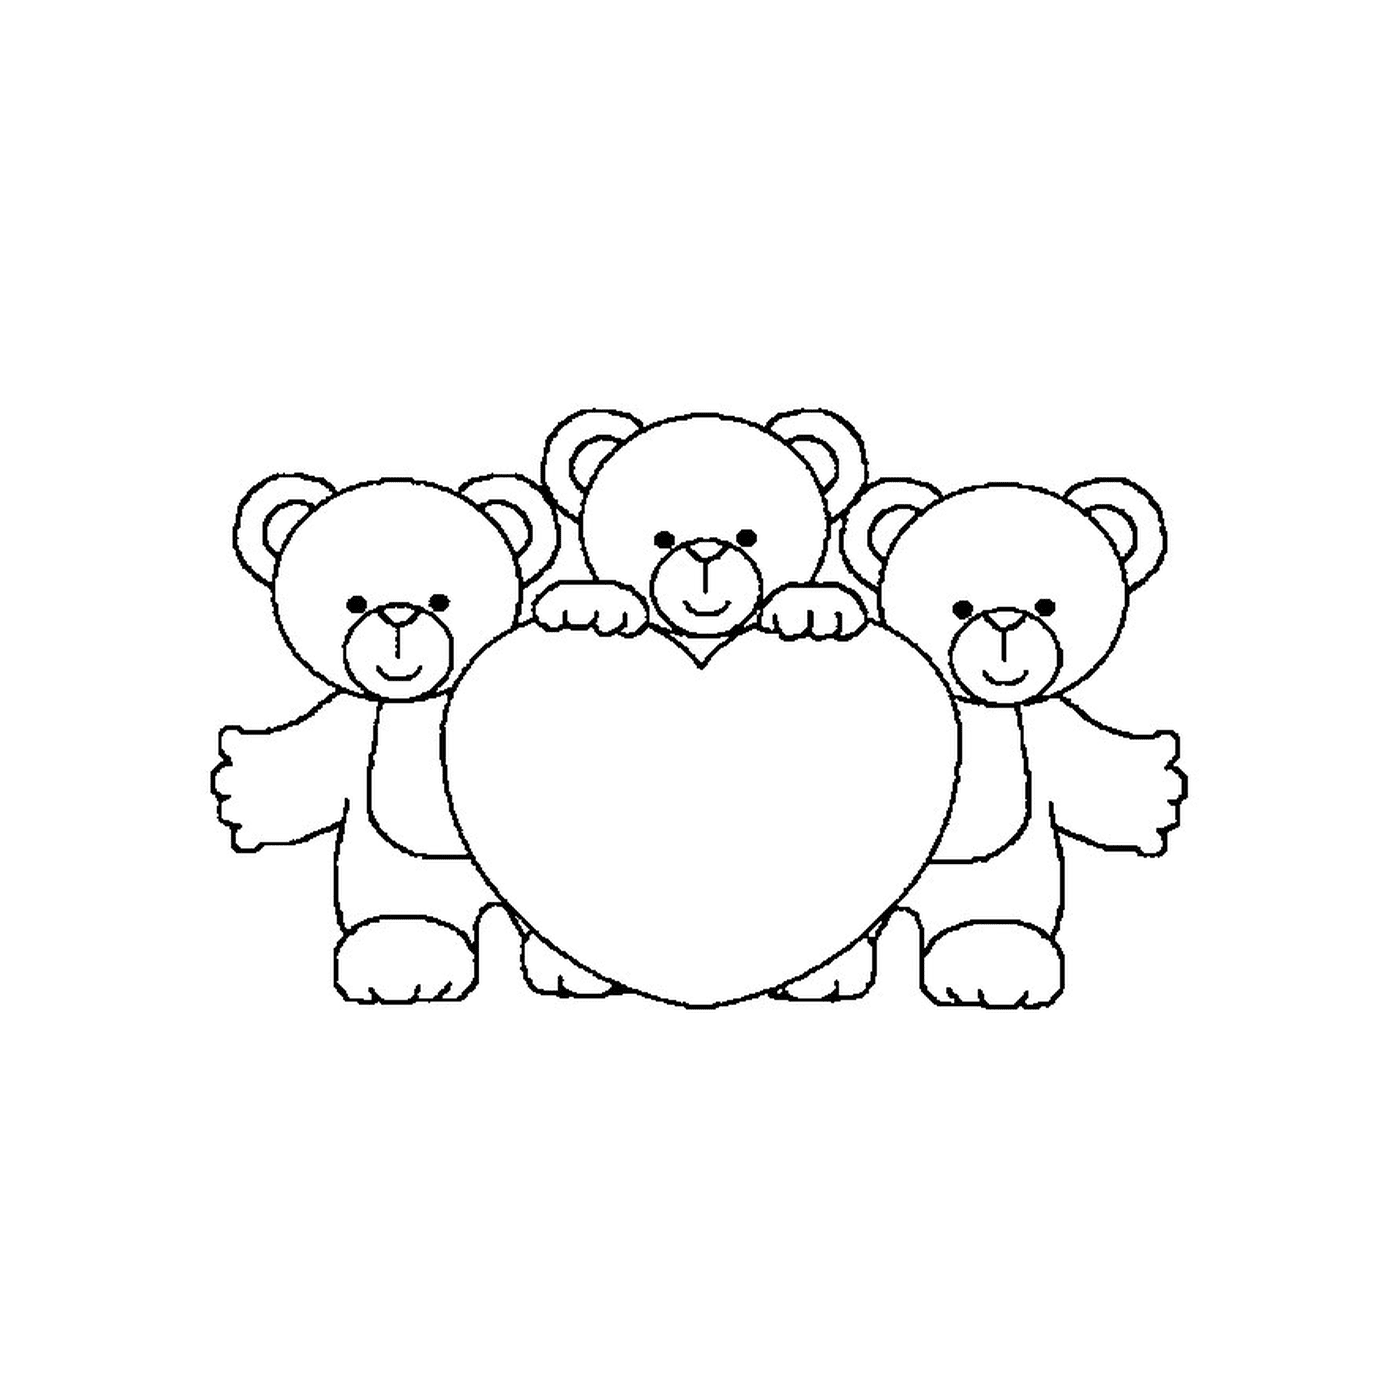  Three teddy bears holding a big heart 